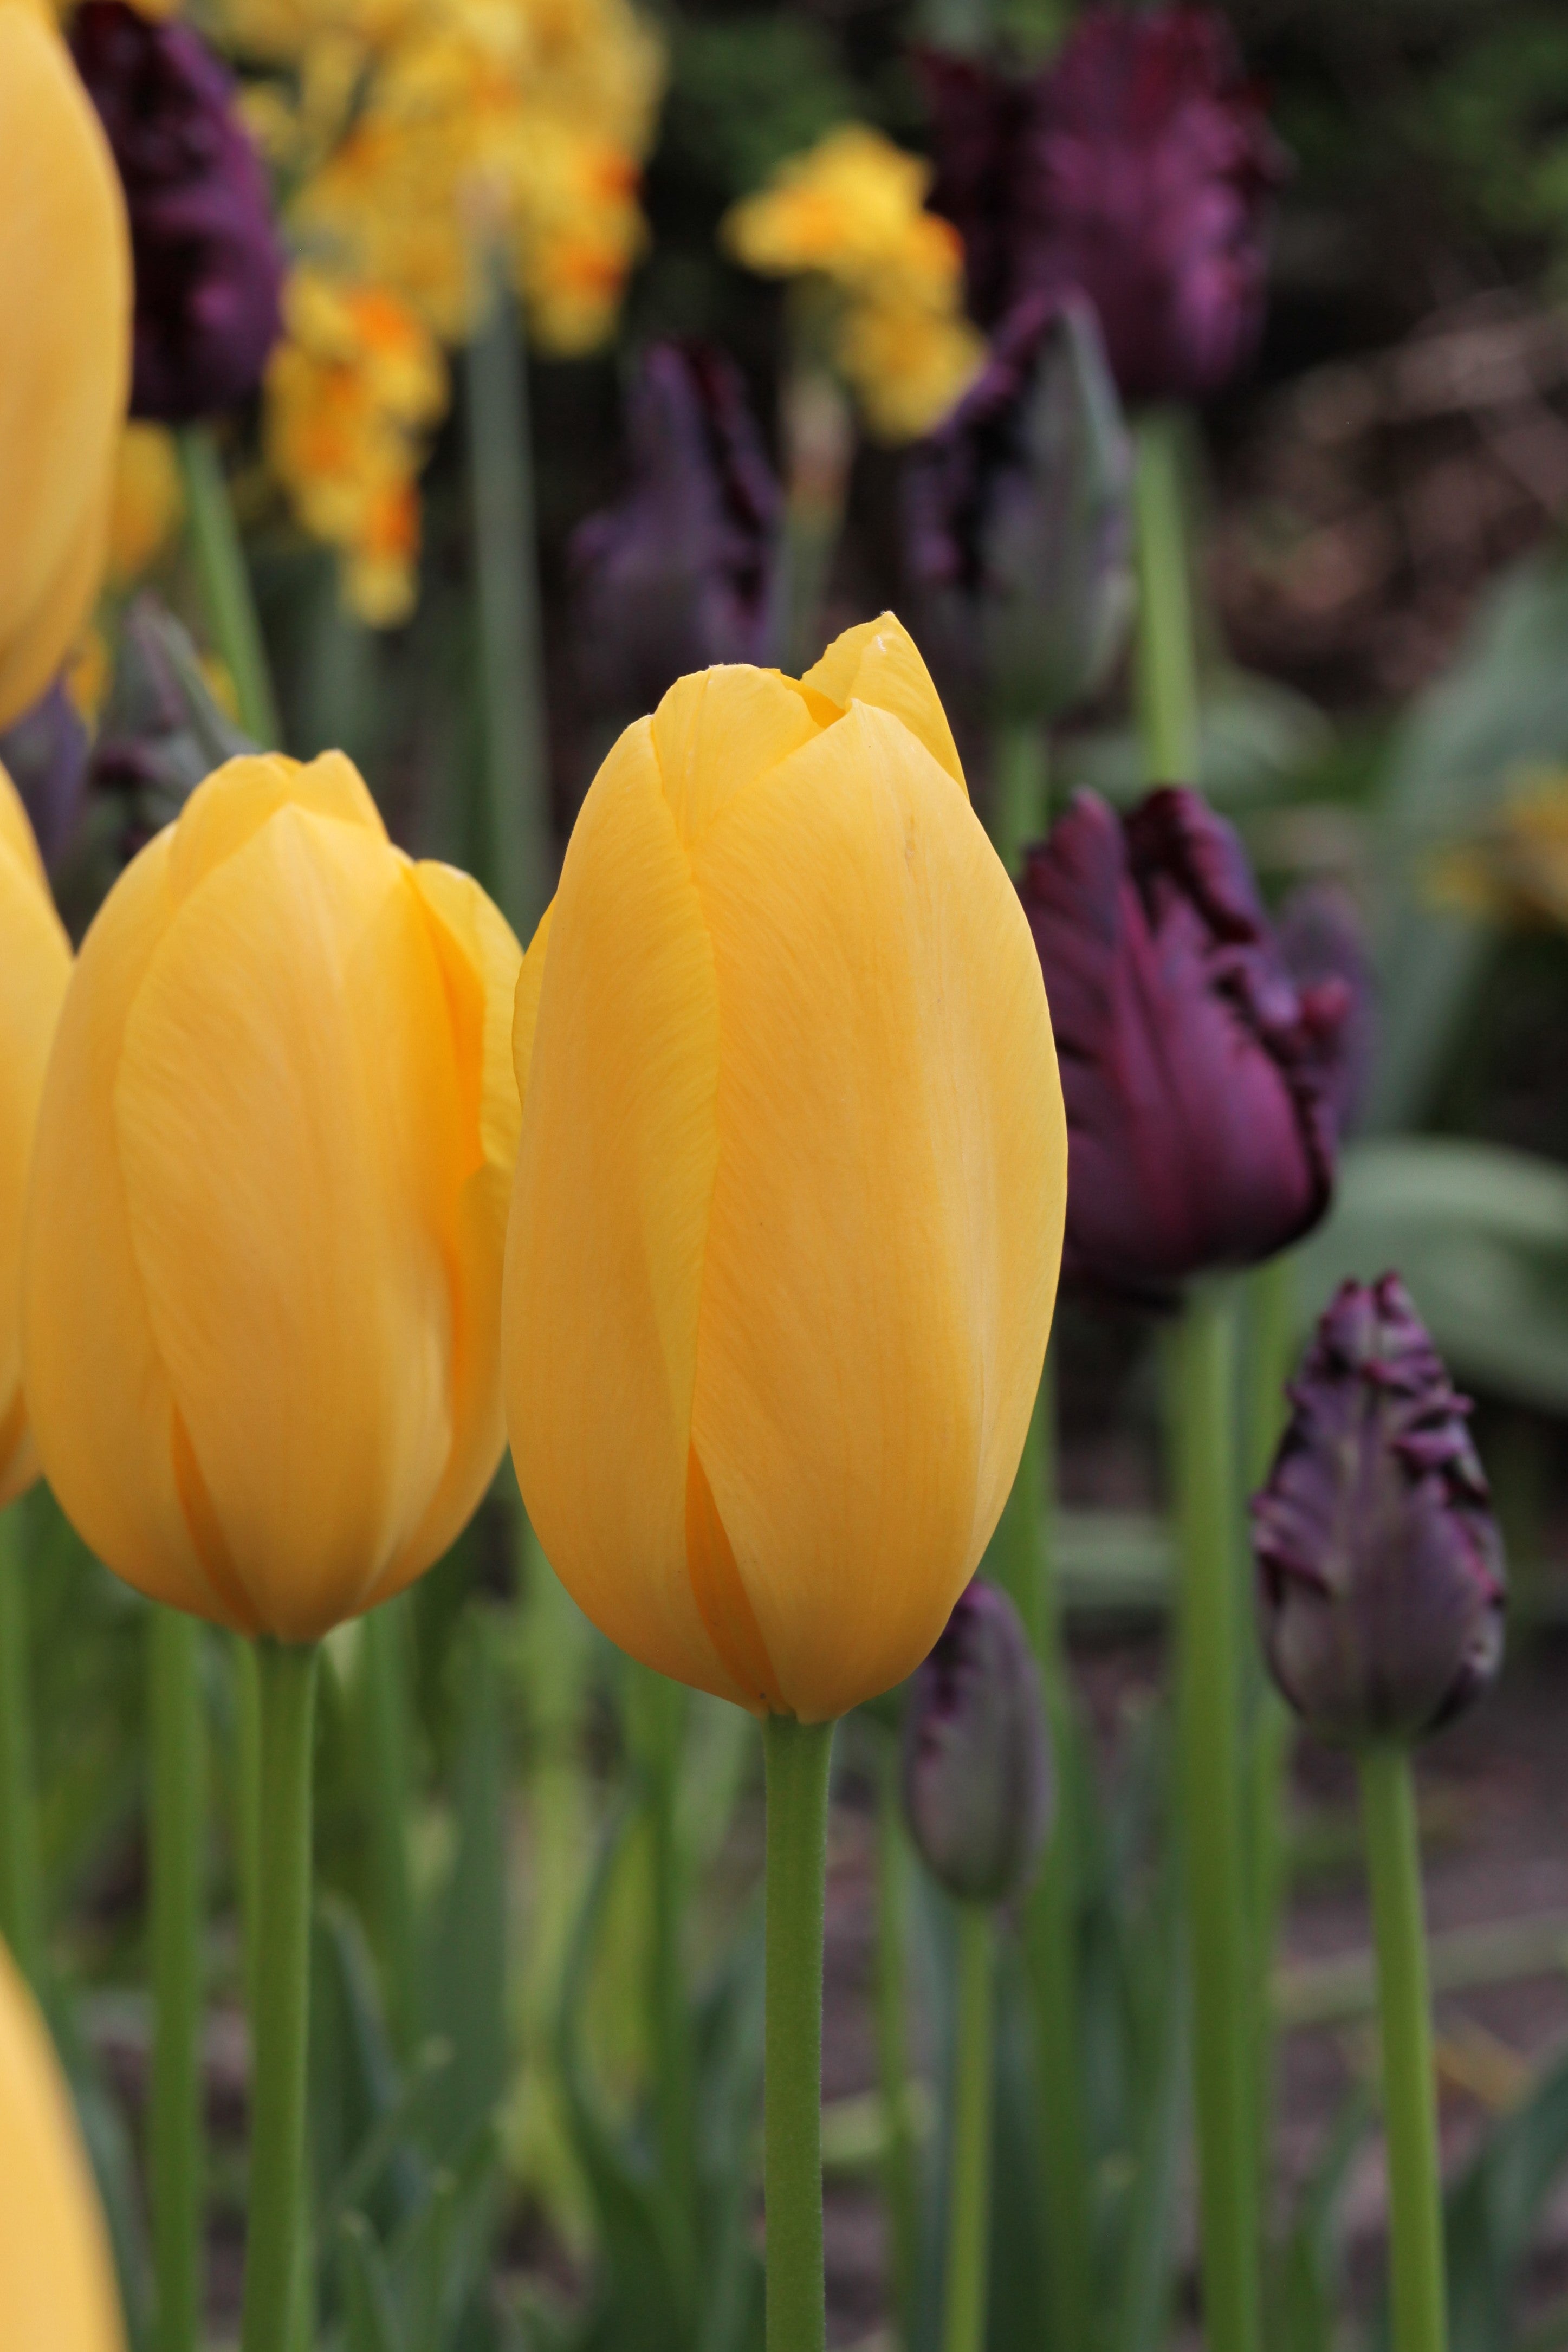 Single late tulips muscadet has golden-yellow, elegant petals in full bloom